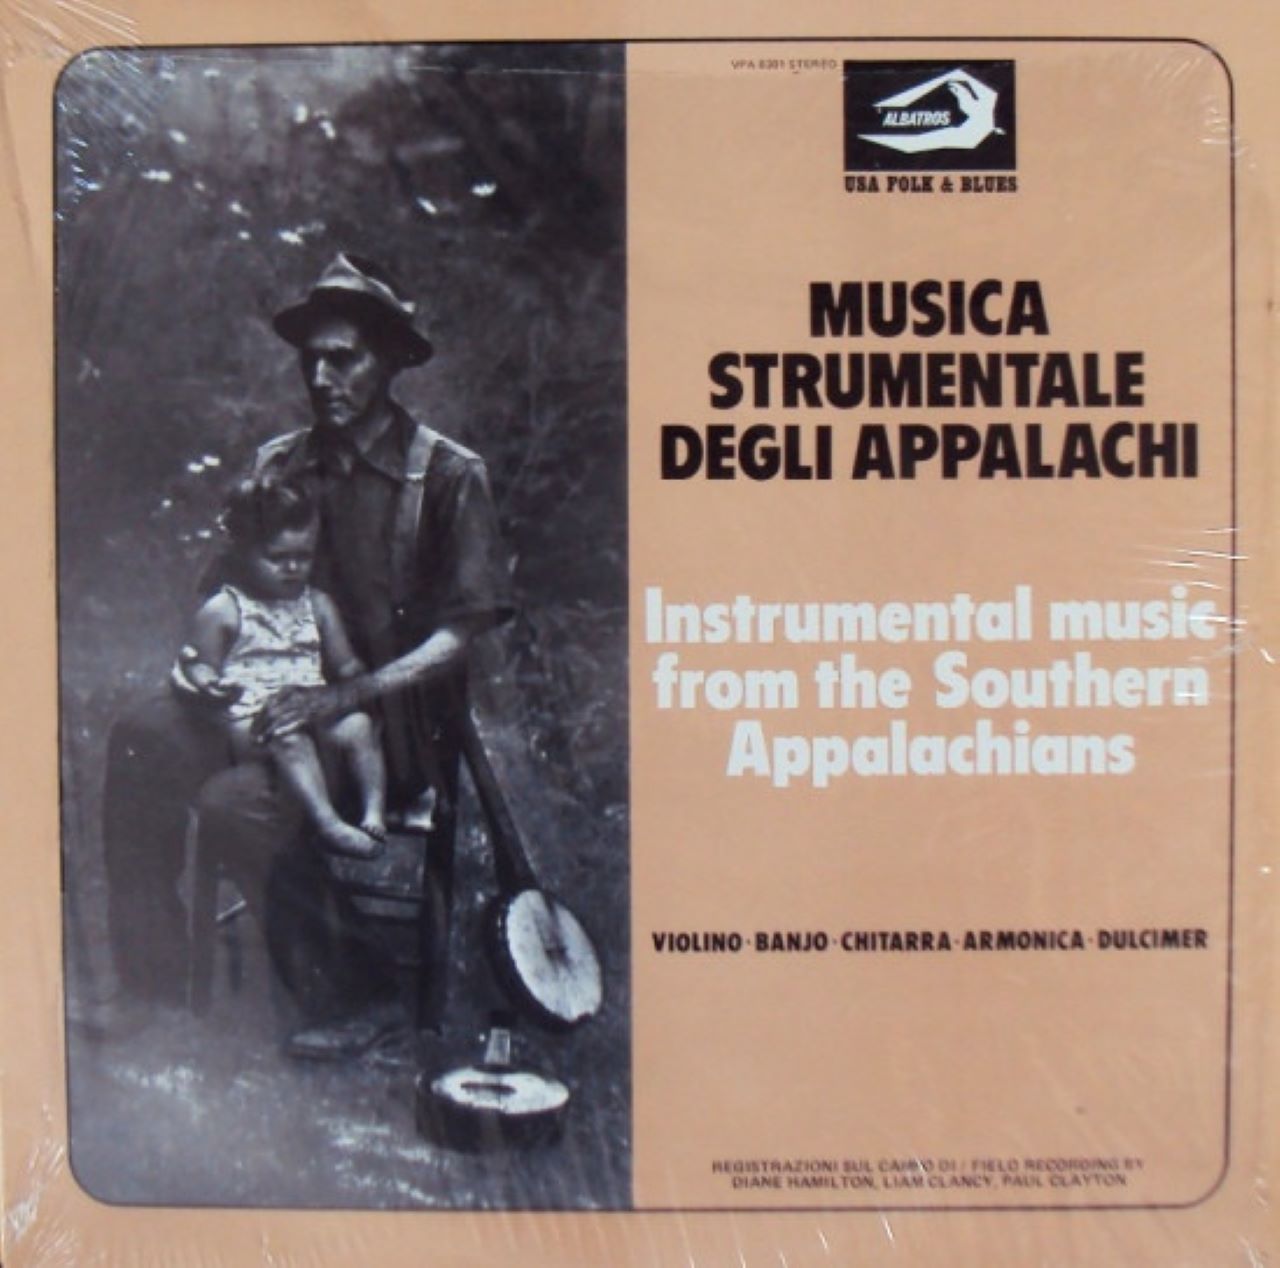 A.A.V.V. - Musica Strumentale degli Appalachi cover album